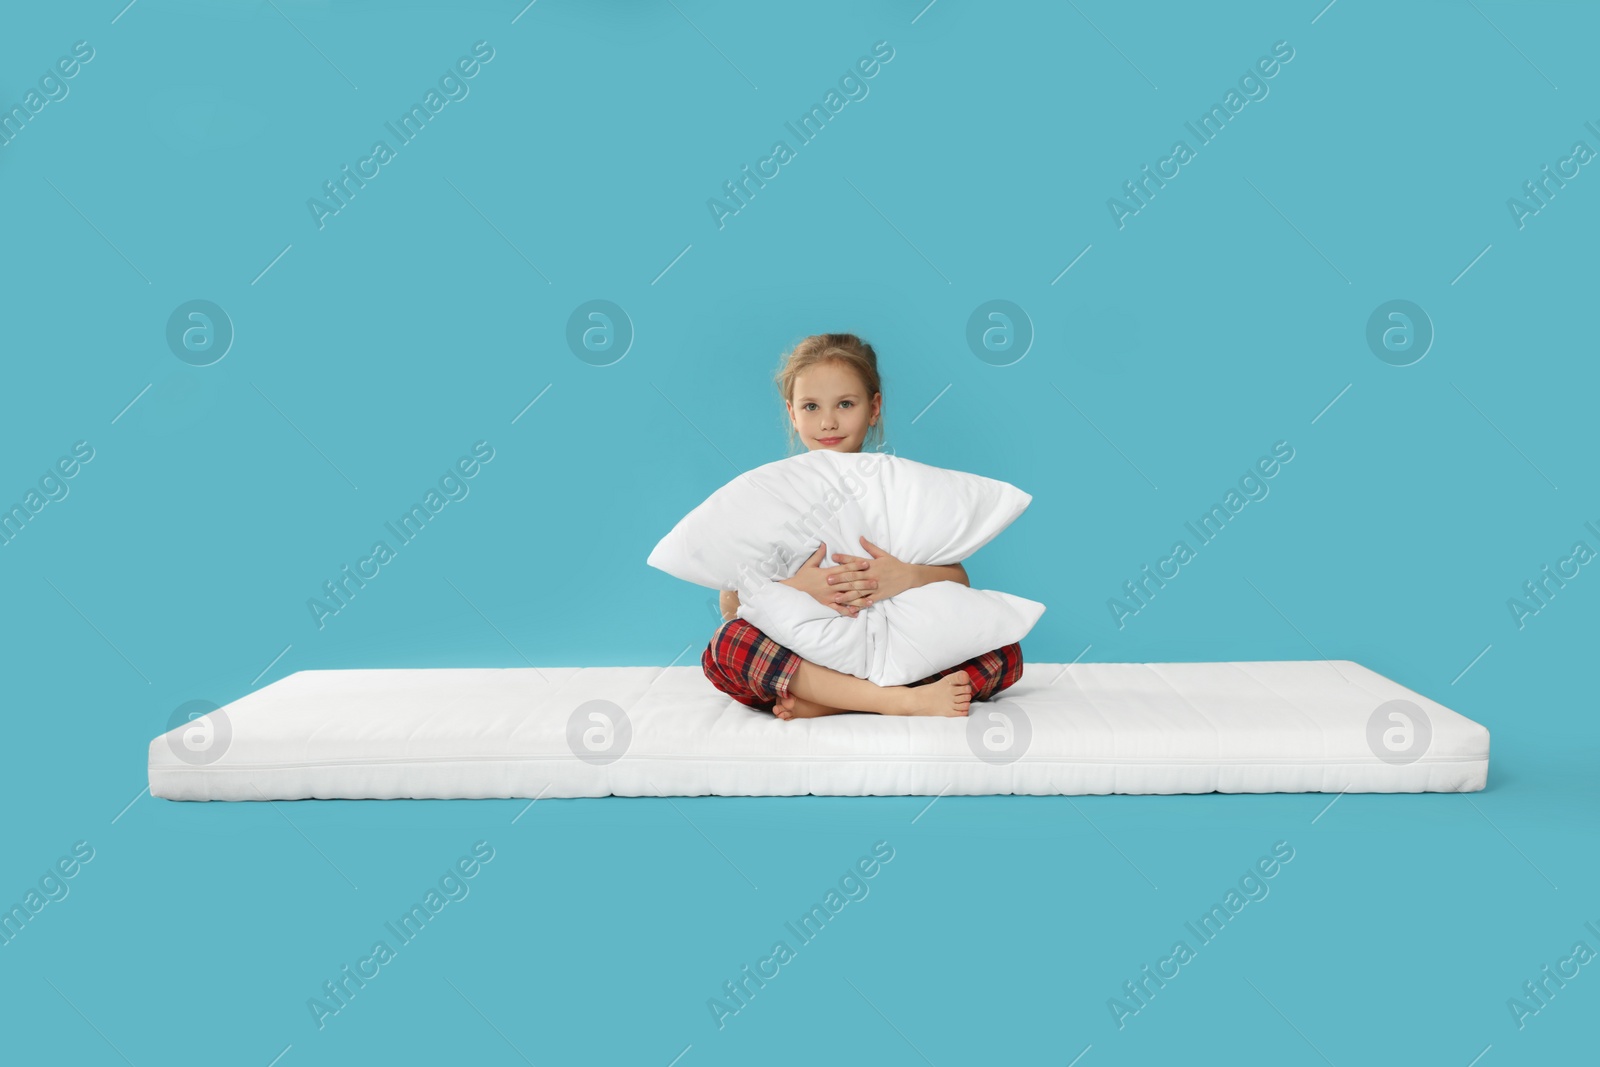 Photo of Little girl hugging pillow on mattress against light blue background